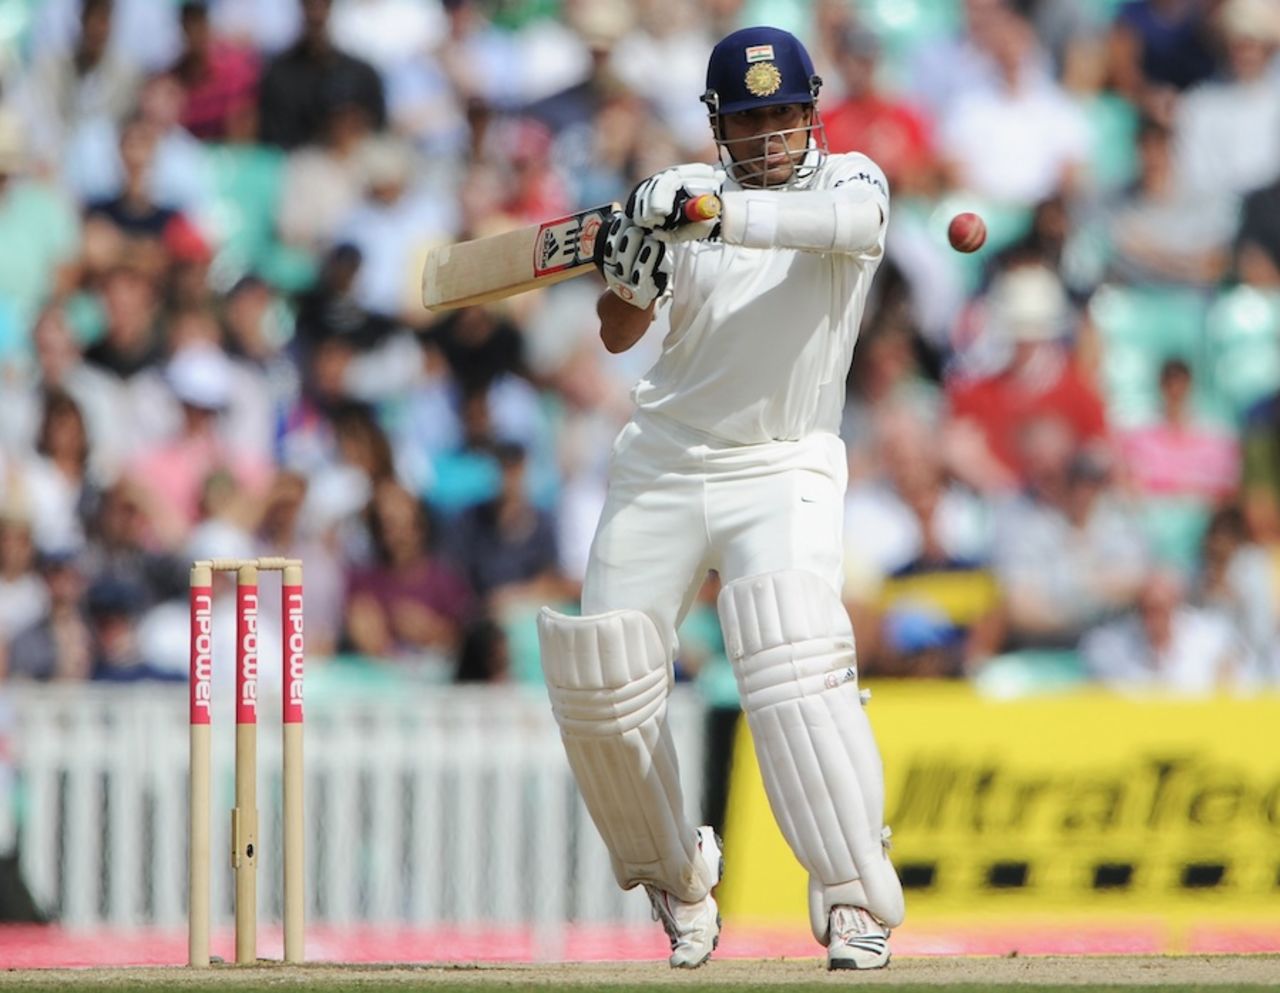 Sachin Tendulkar prepares to upper cut, England v India, 4th Test, The Oval, 5th day, August 22, 2011